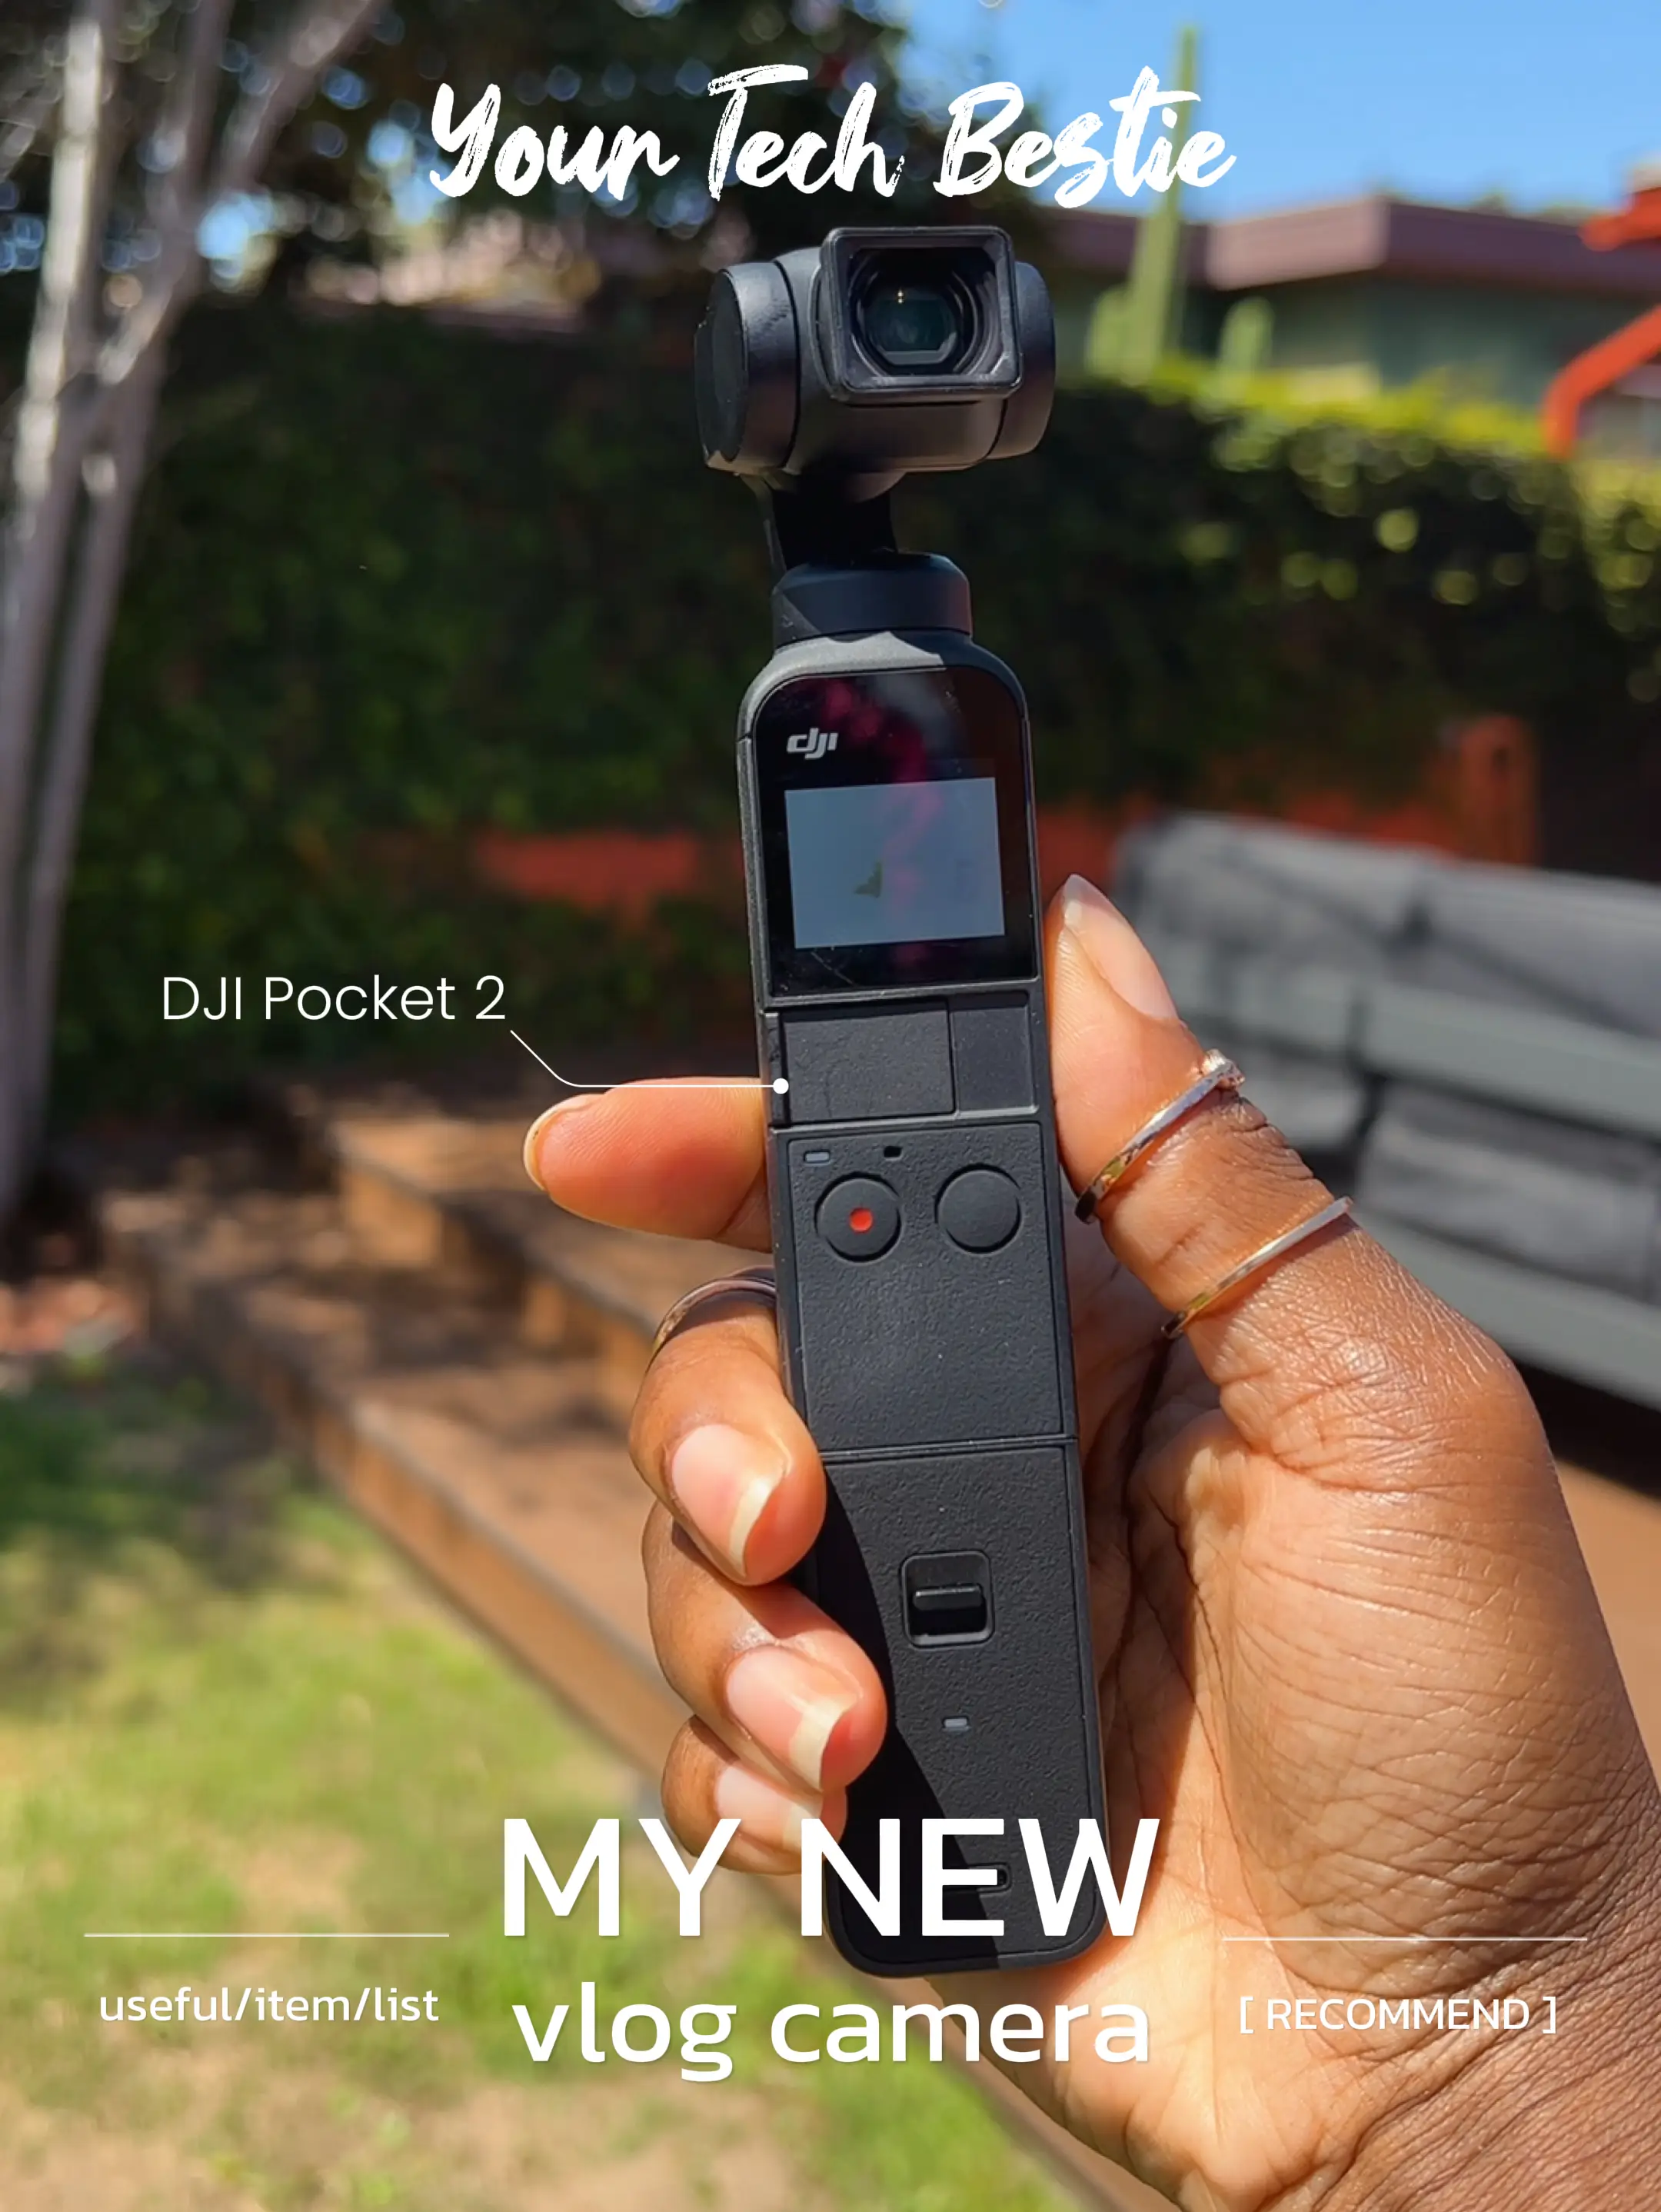 The Ultimate Vlogging Setup With The DJI Pocket 2 